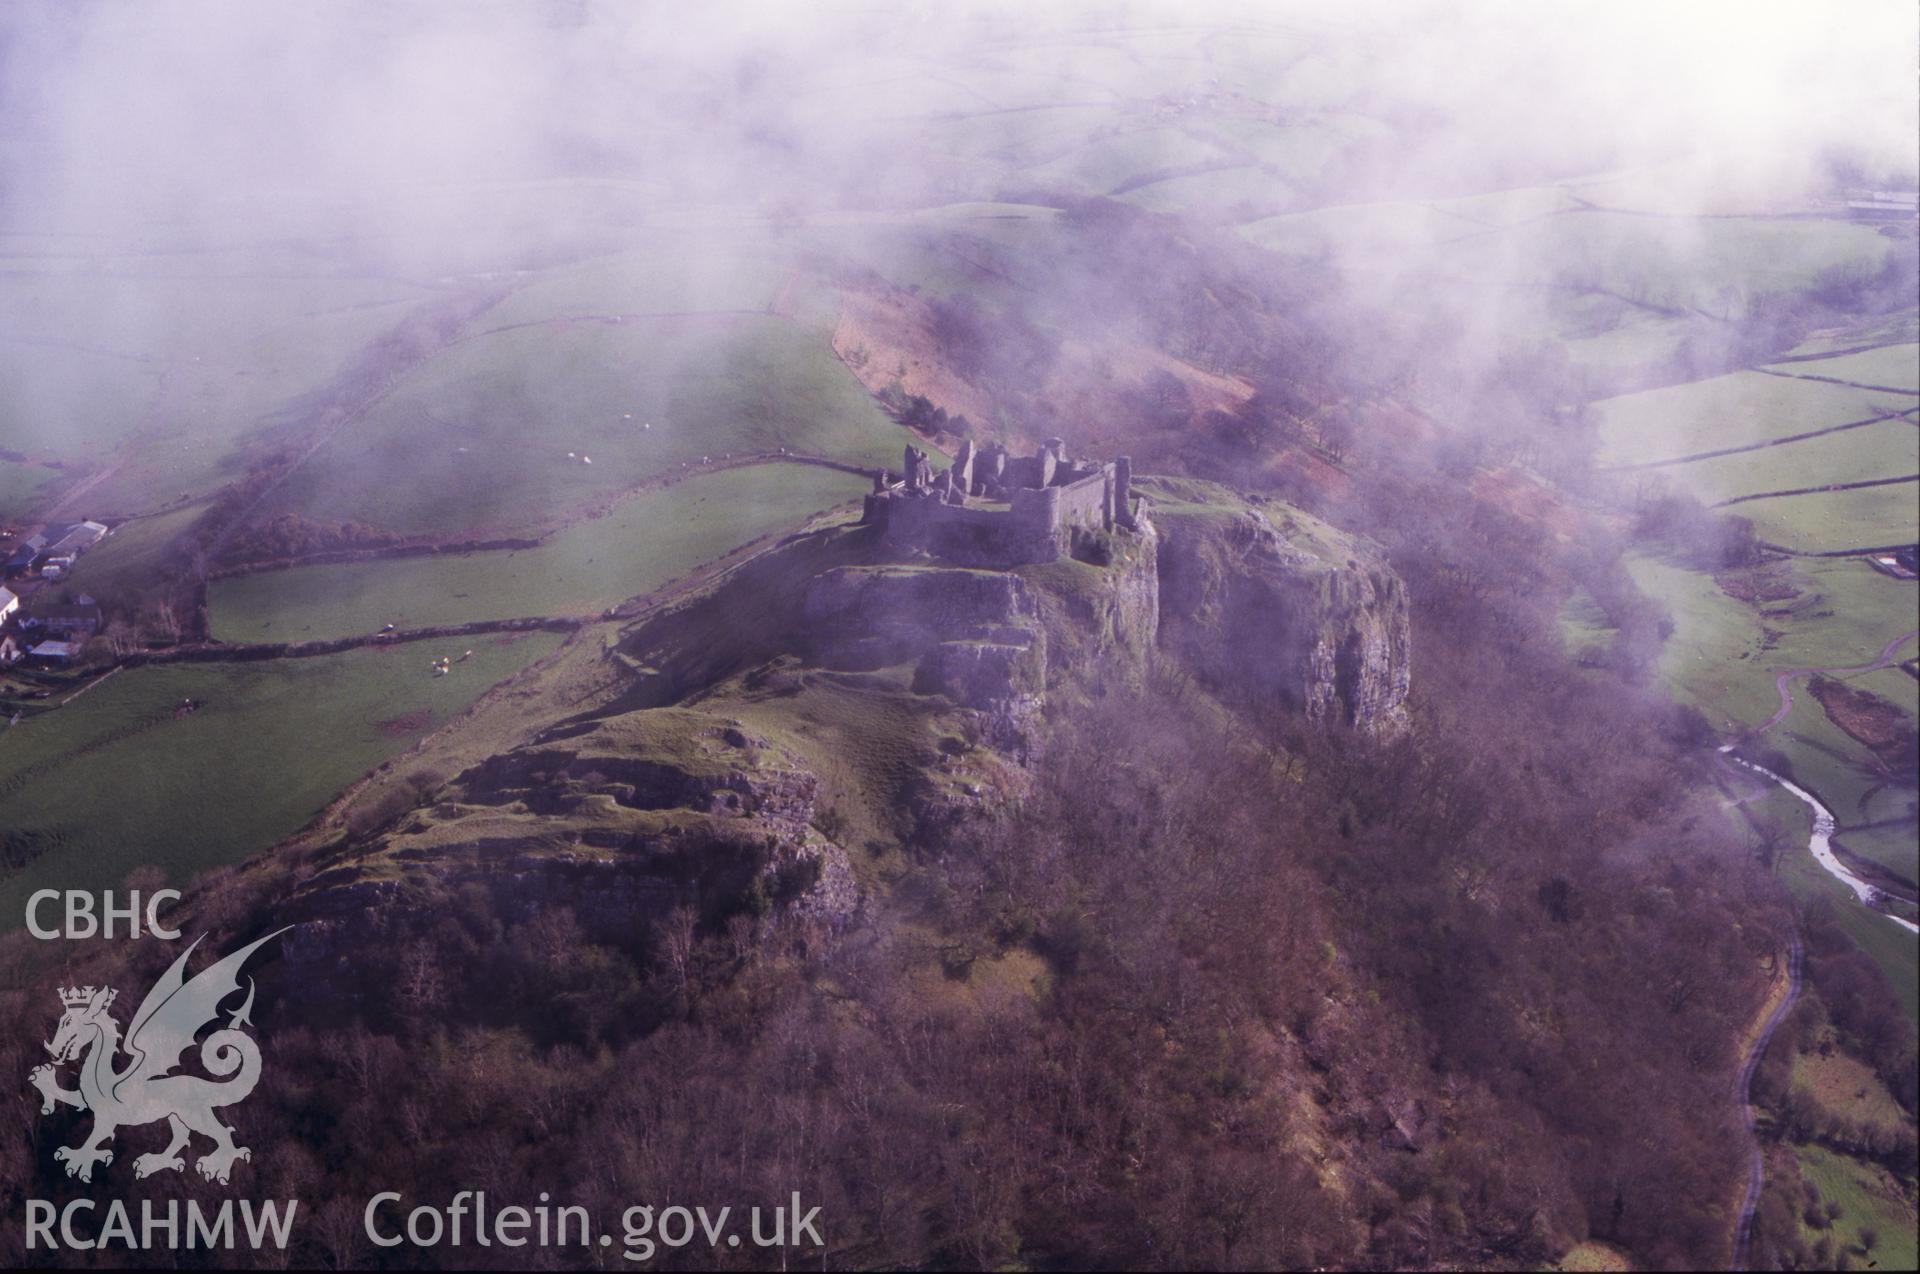 RCAHMW colour oblique aerial photograph of Carreg Cennen Castle taken on 19/04/1995 by C.R. Musson